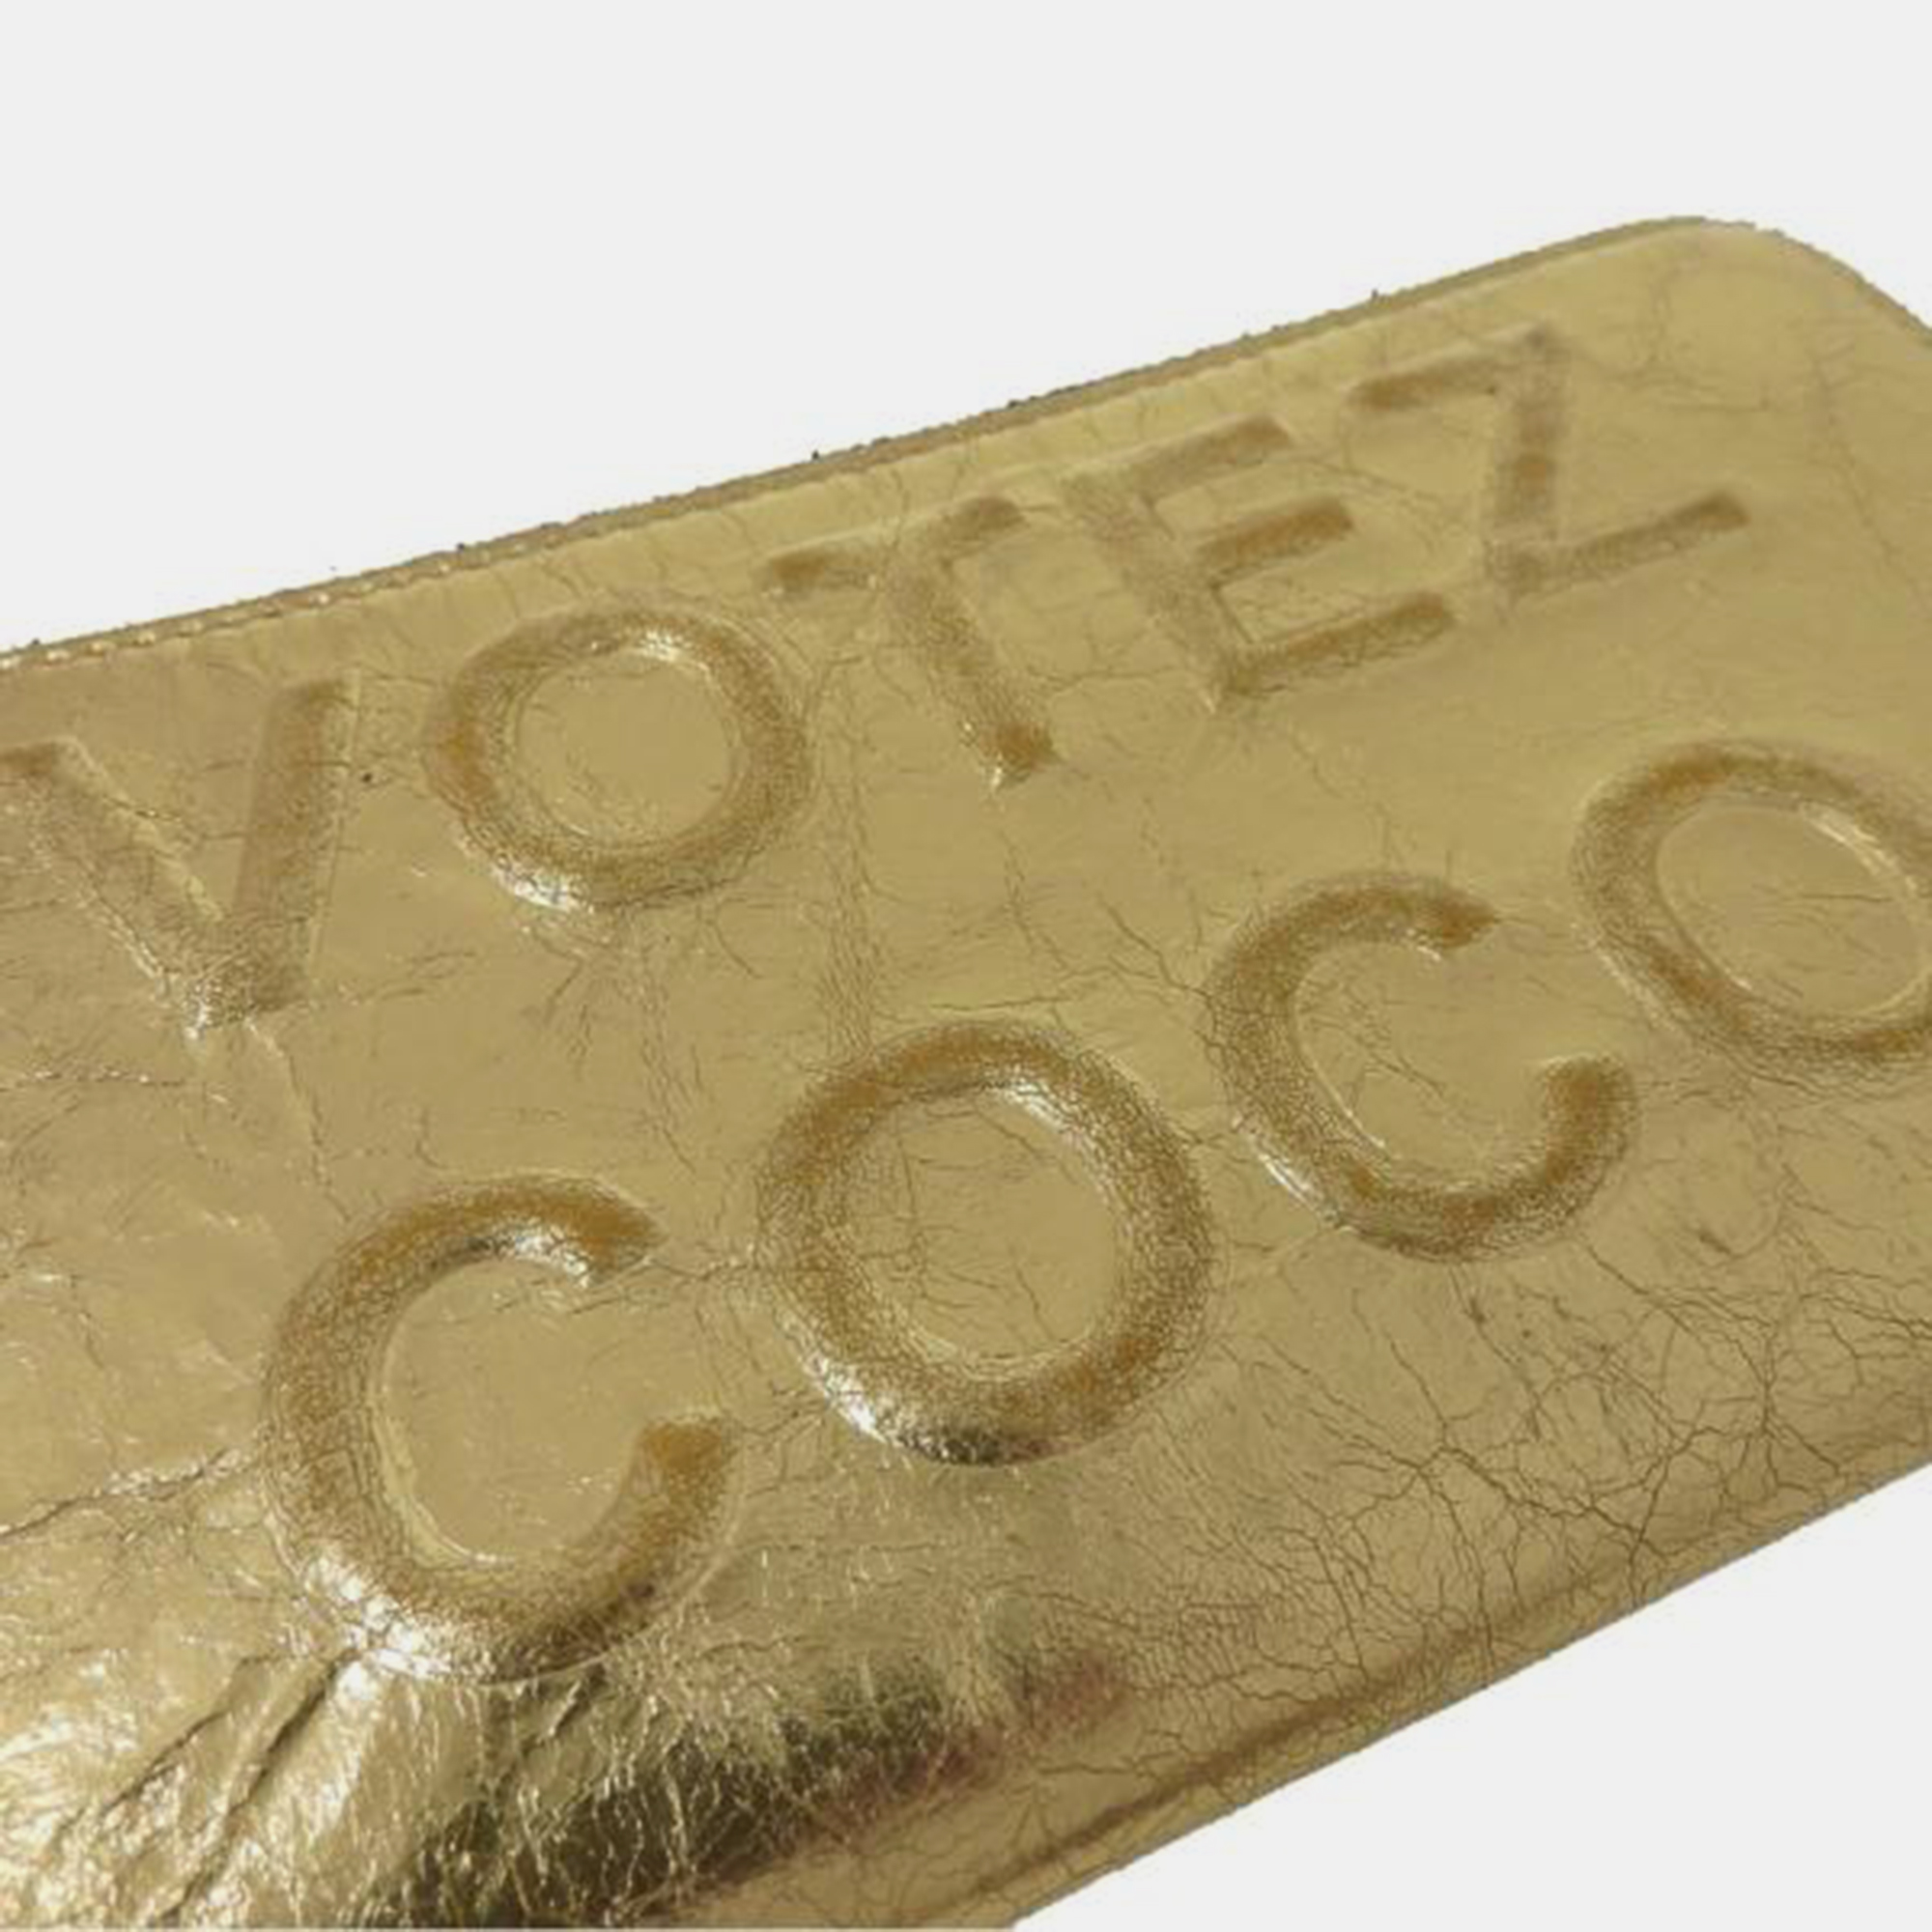 Chanel Gold Leather Votez Coco Zip Around Wallet